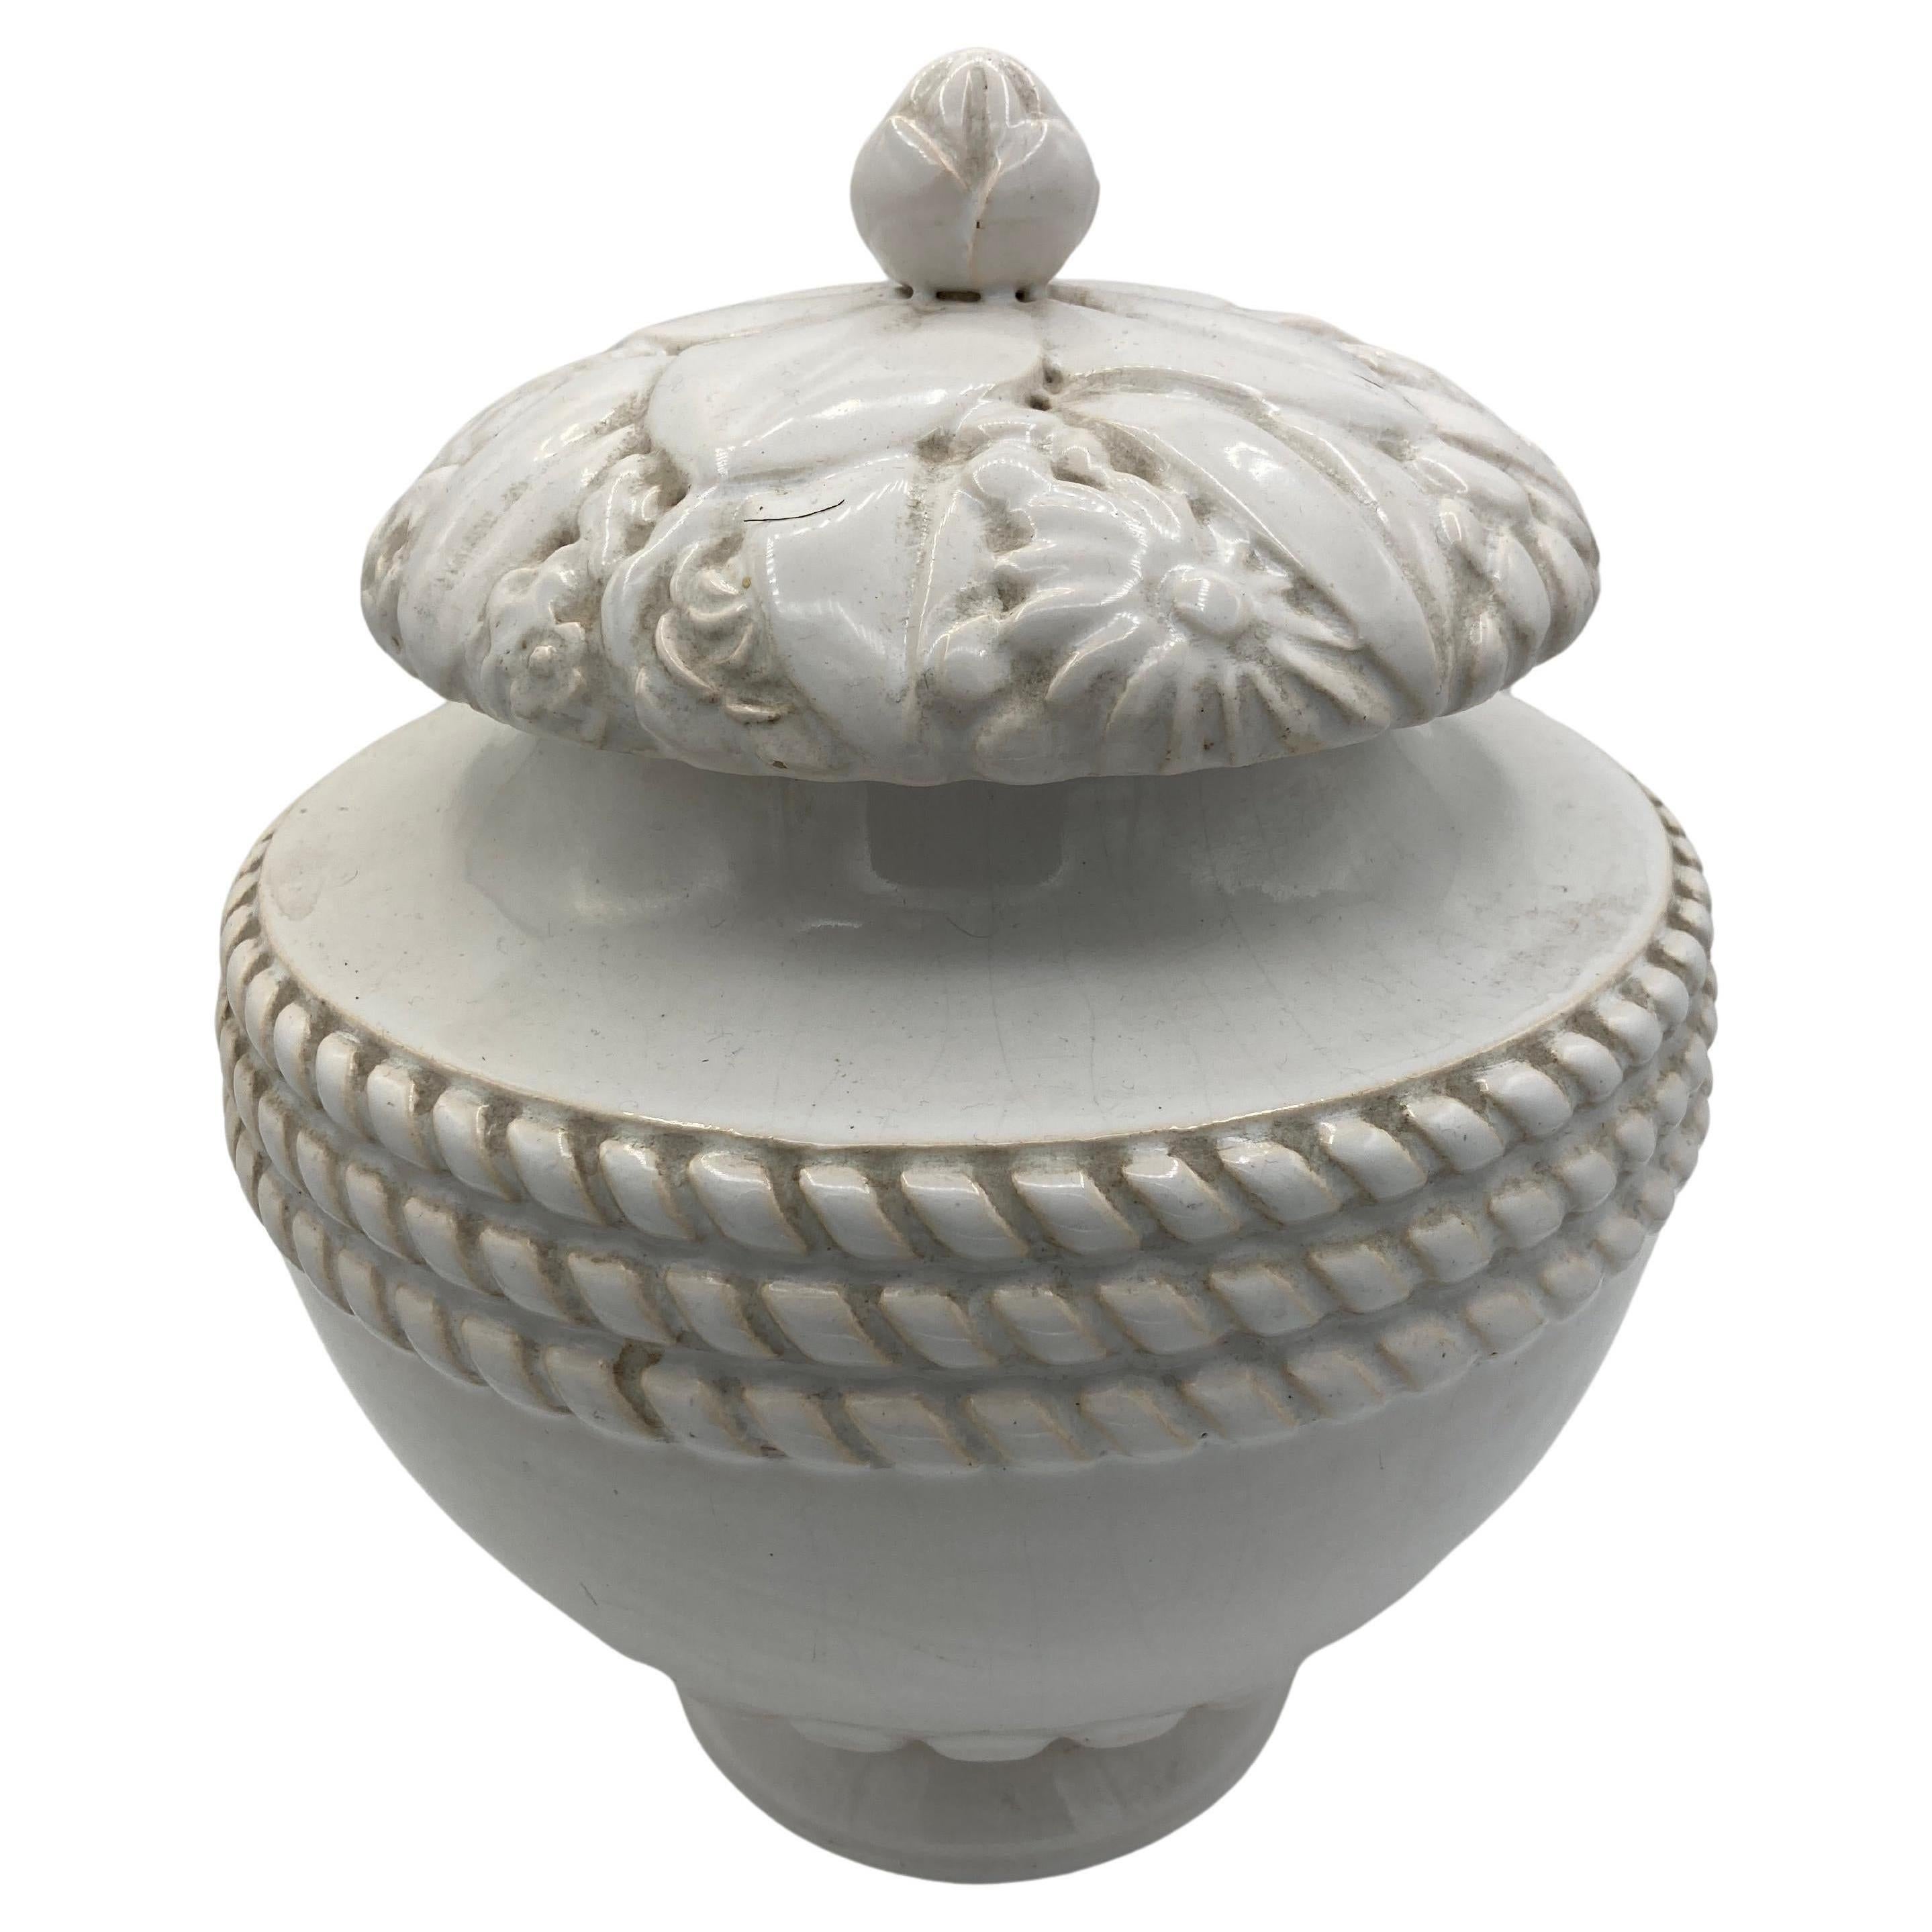 Ceramic urn designed by Louis Sue et André Mare